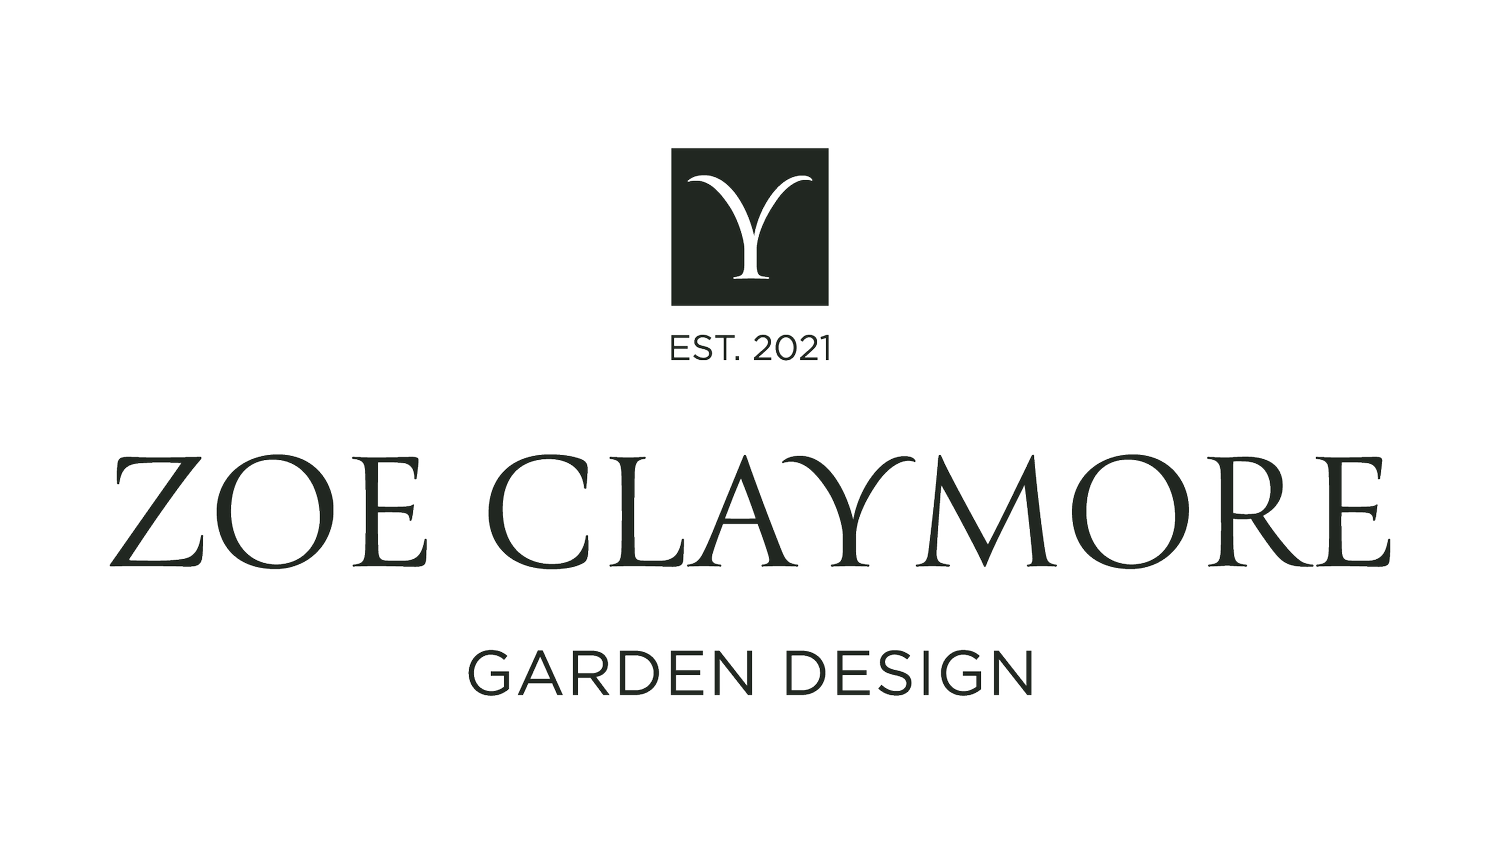 Zoe Claymore Garden Design